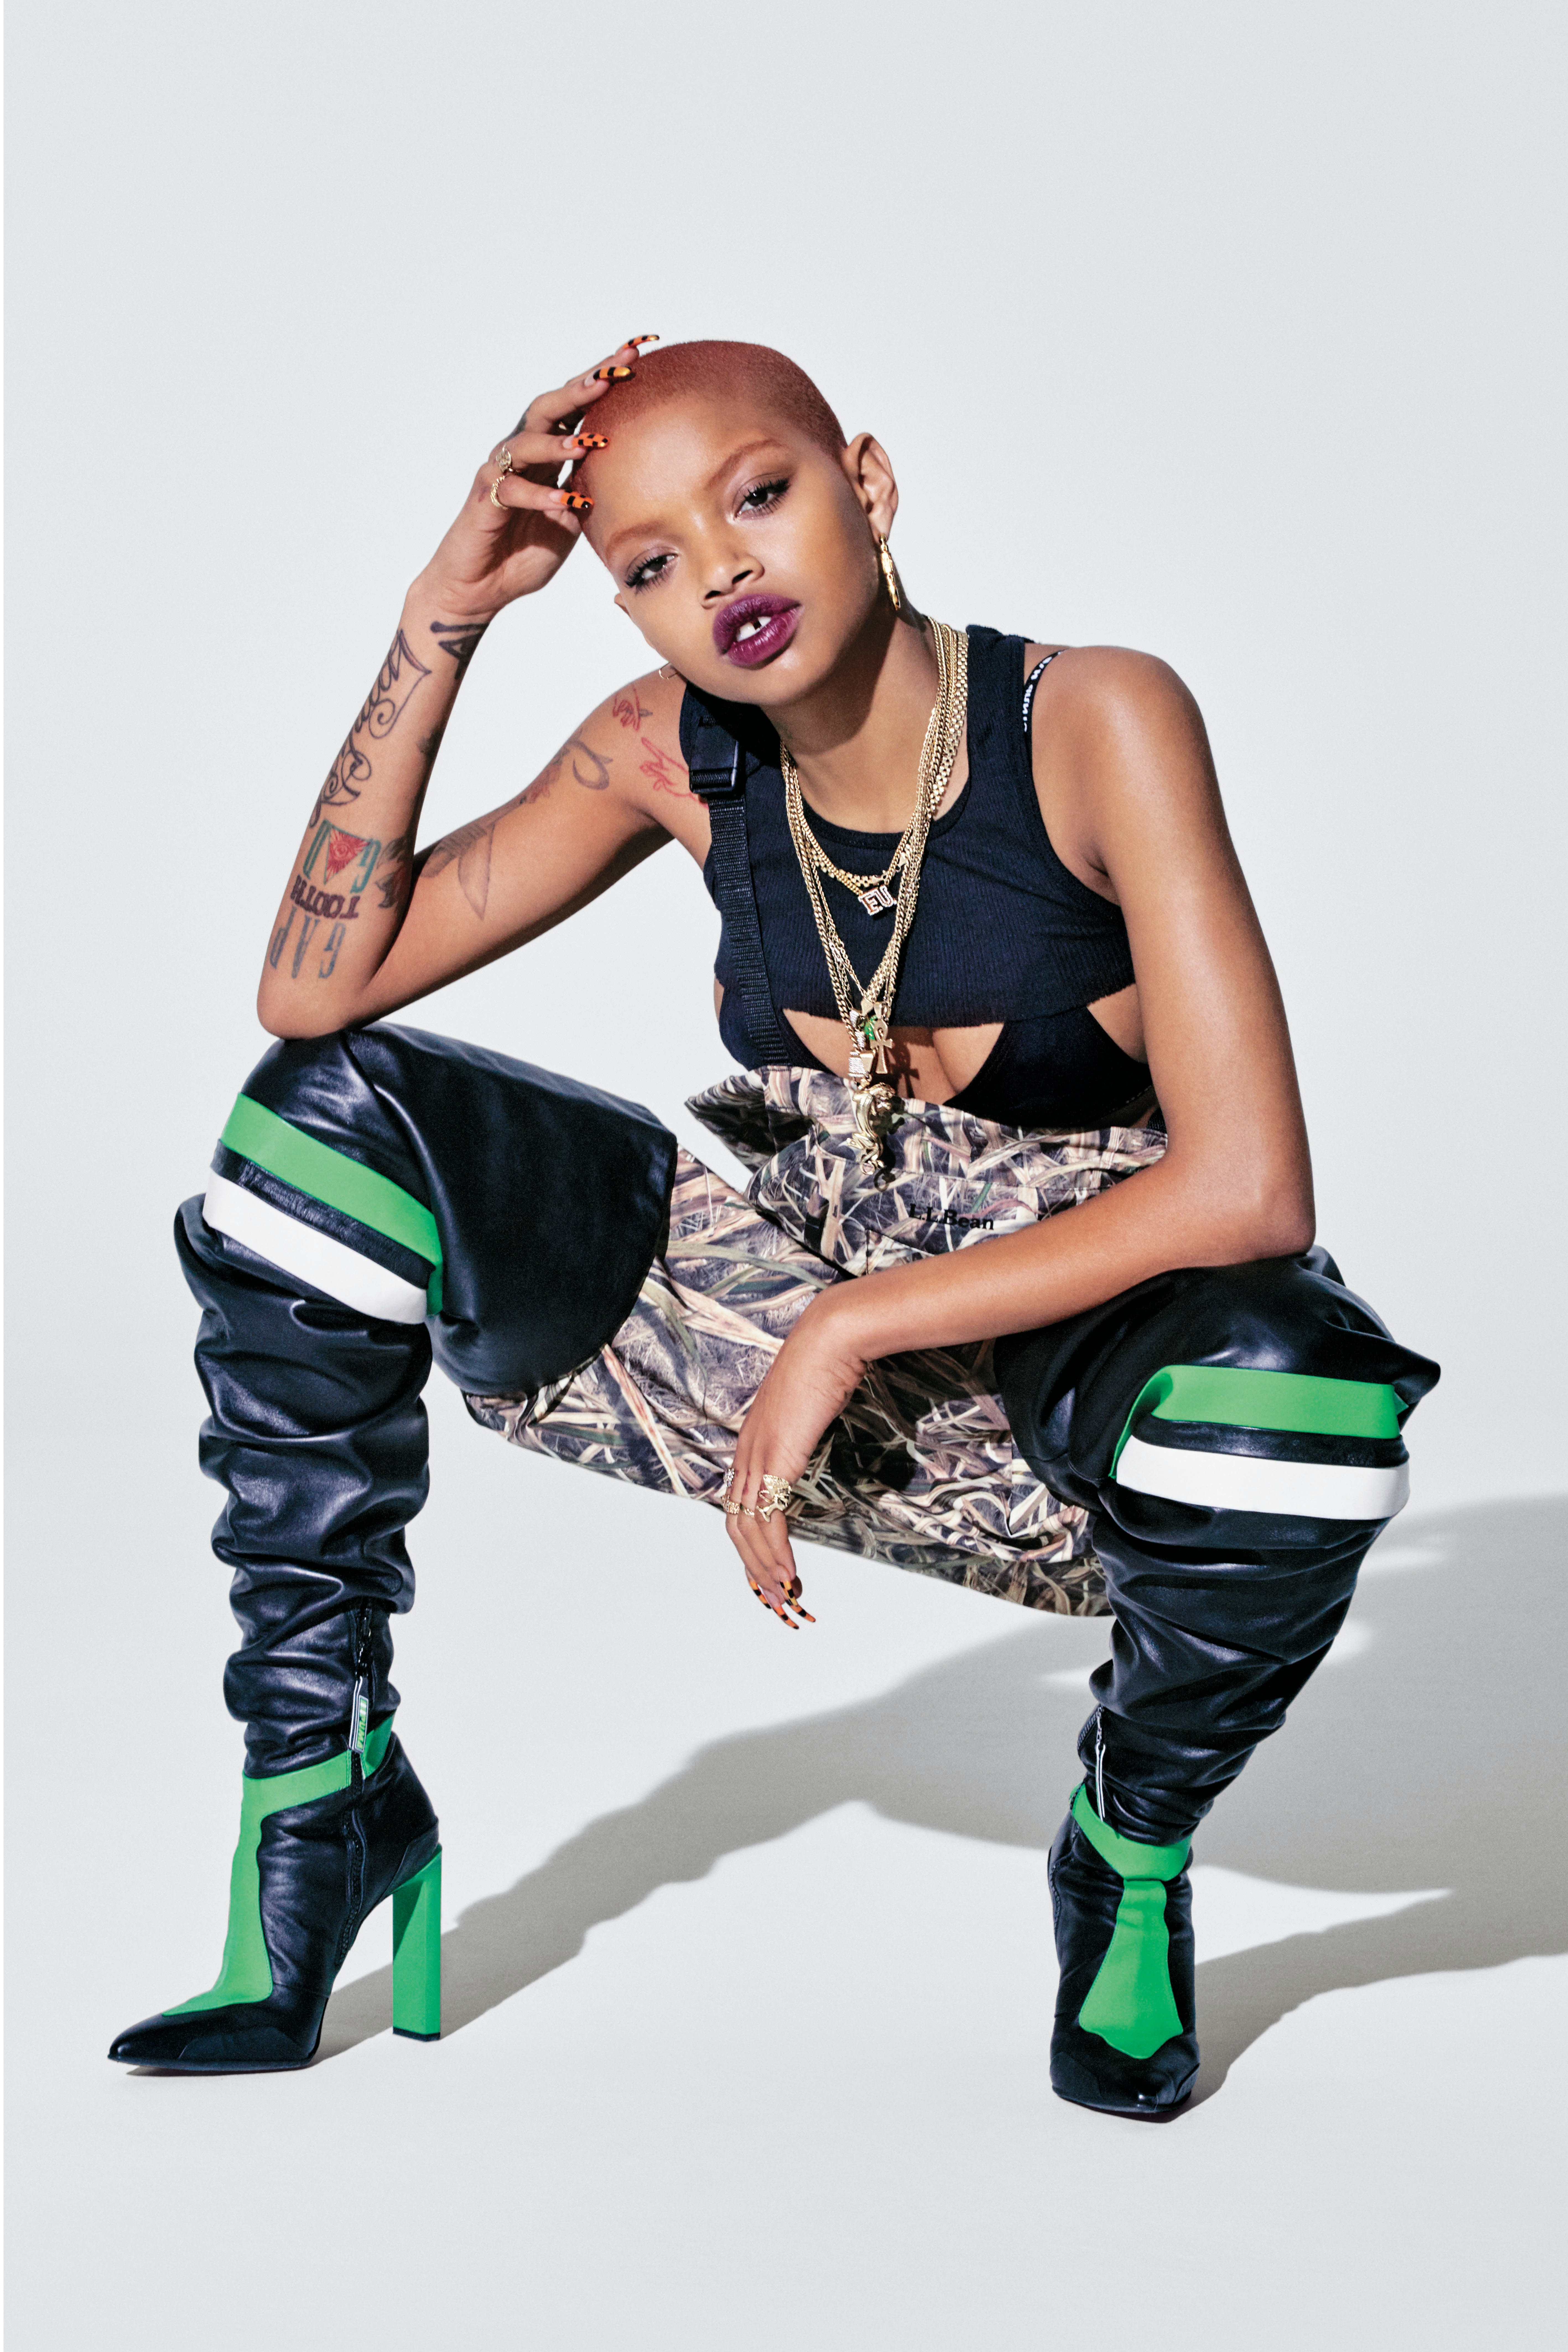 Slick Woods Glamour Magazine Interview Feature Modelling Drugs Addiction Rihanna